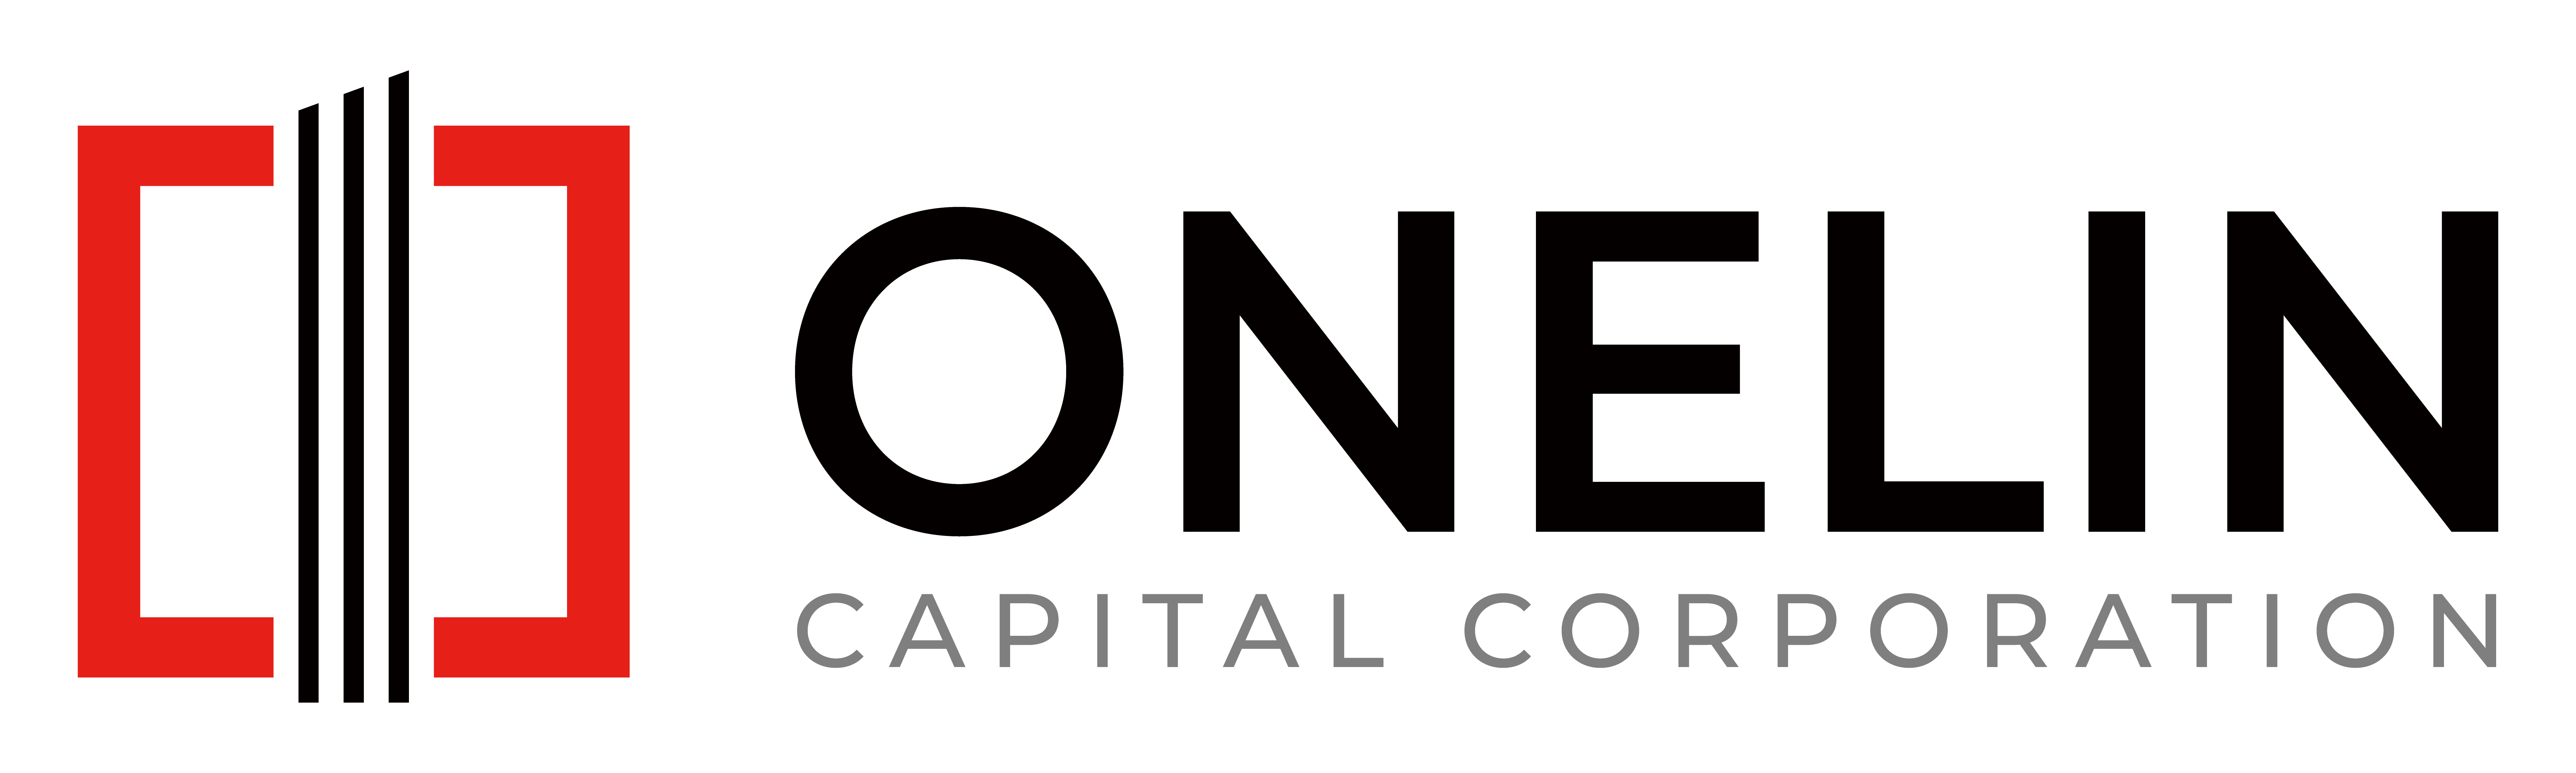 Onelin Capital Corporation